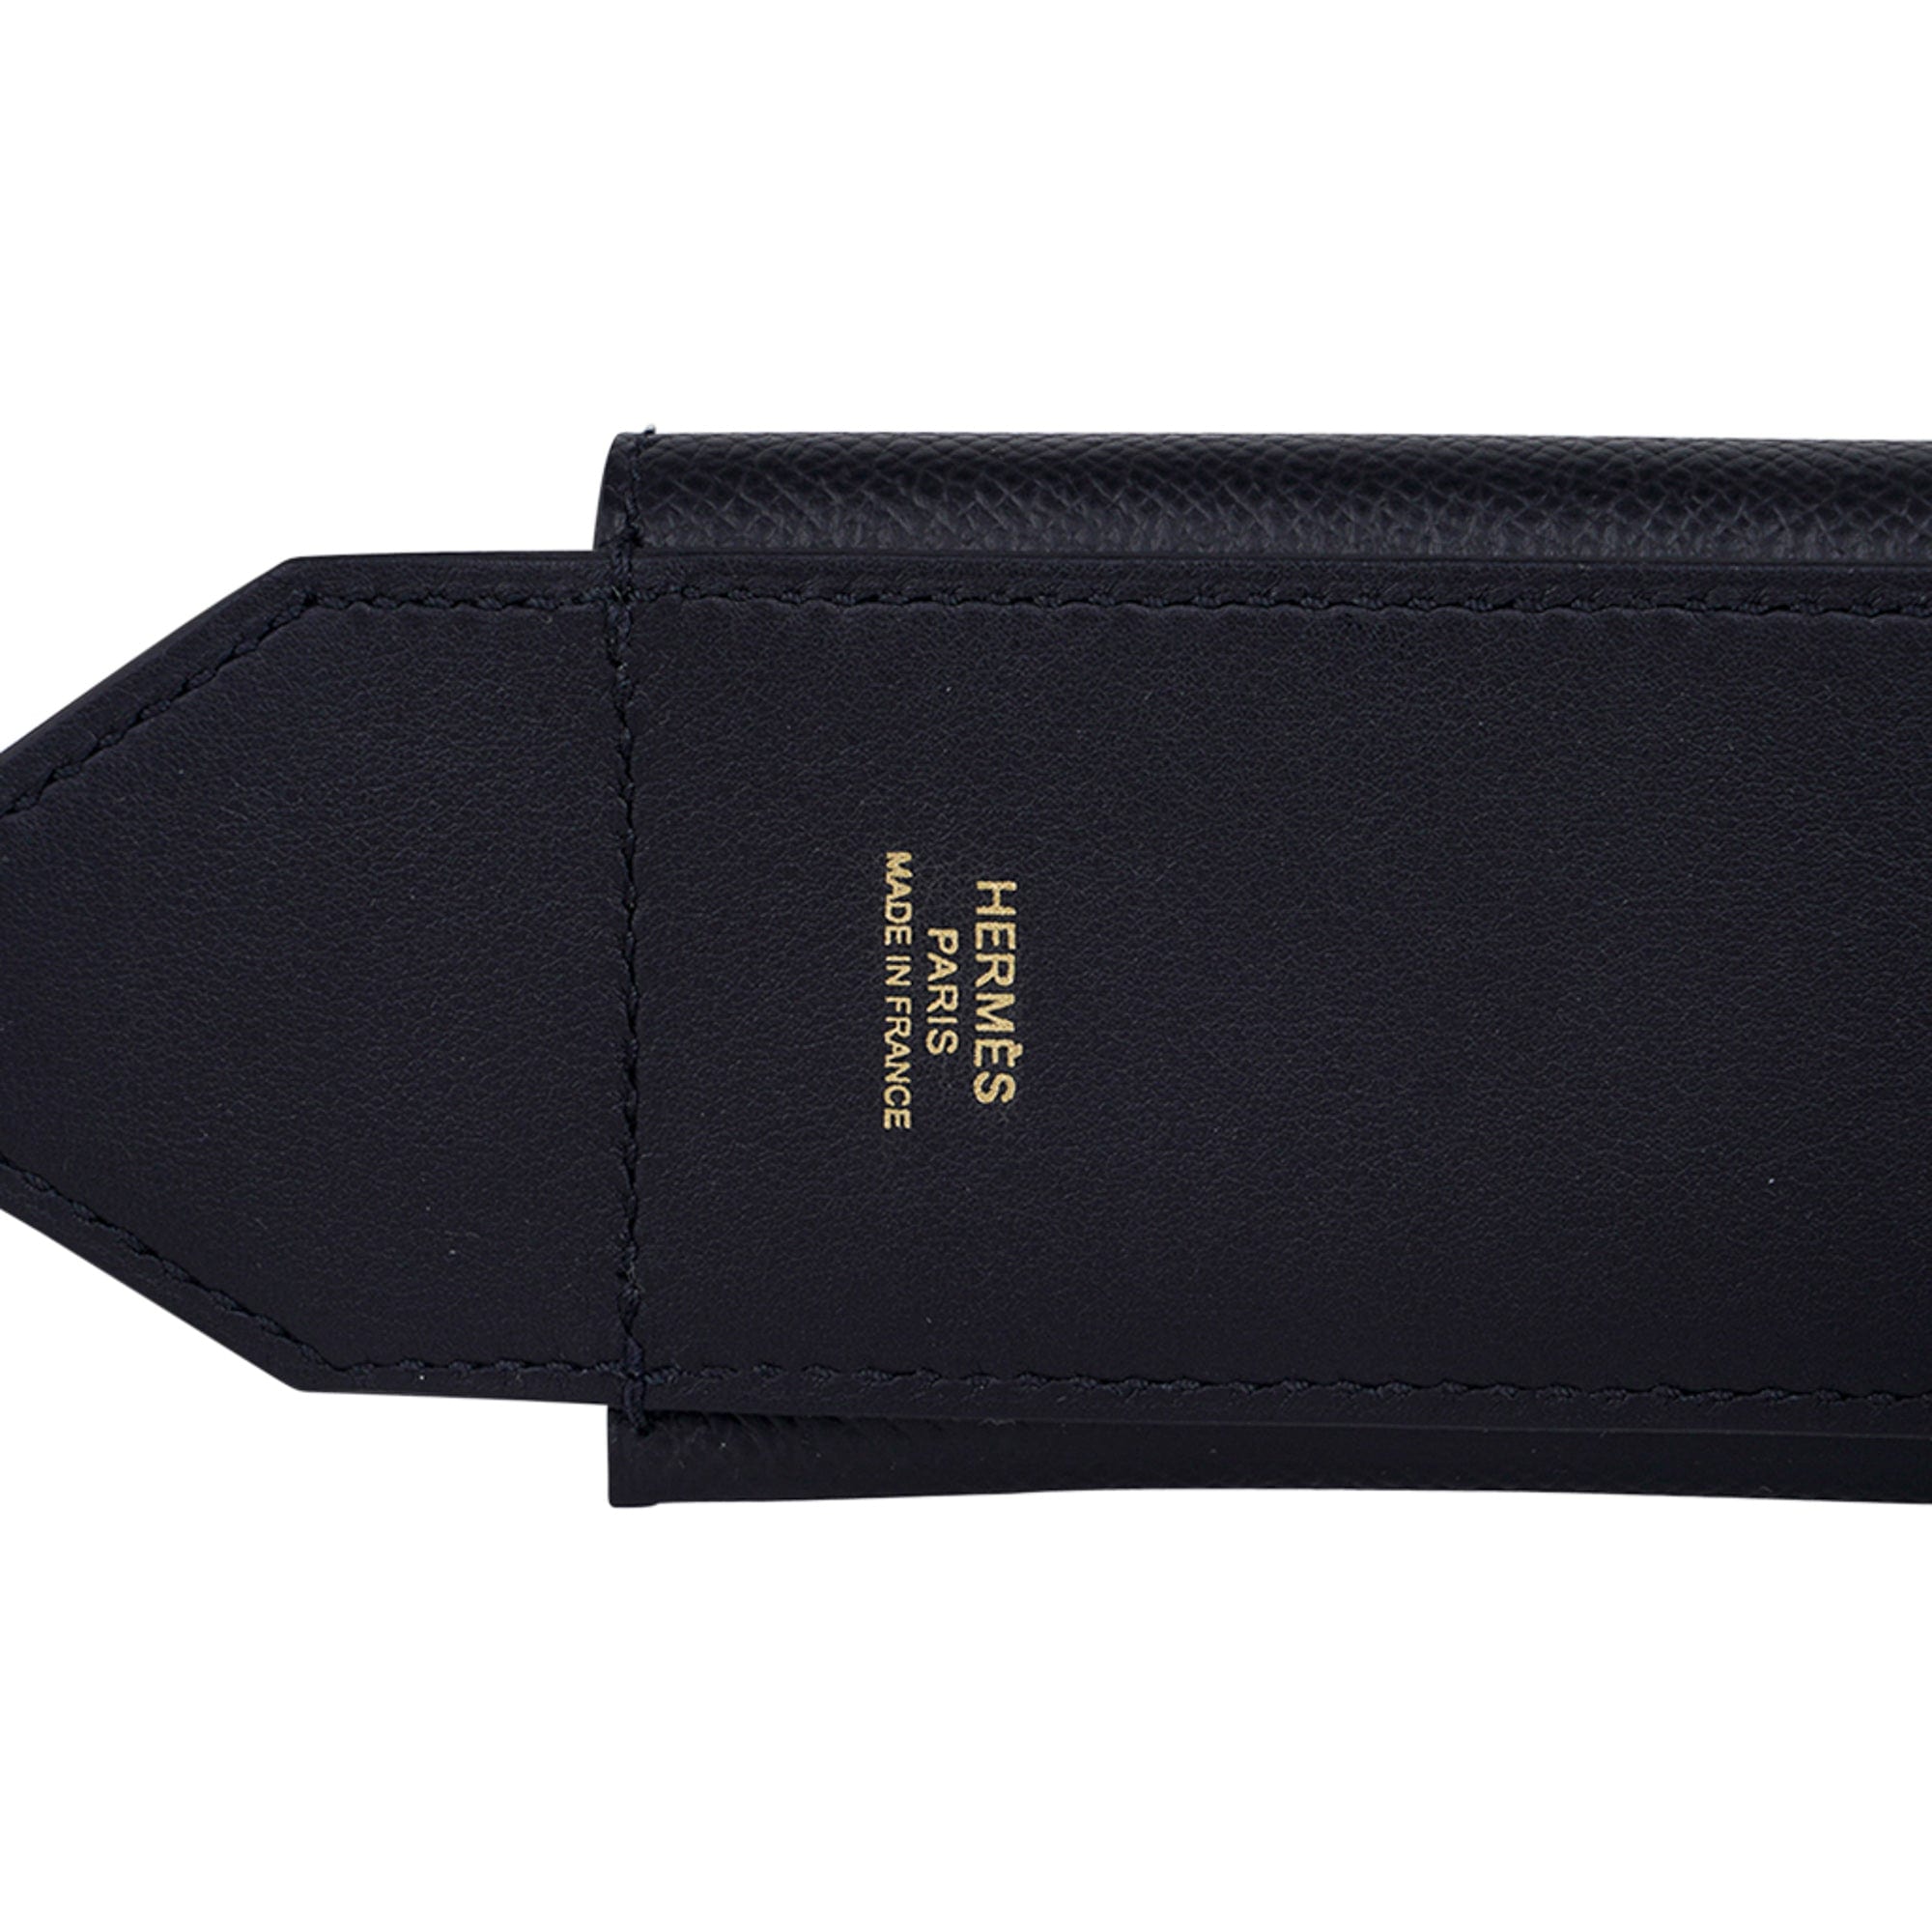 Gold Epsom and Swift Bandoulière Kelly Pocket Strap Gold Hardware, 2020, Fashion Through Time, 2021